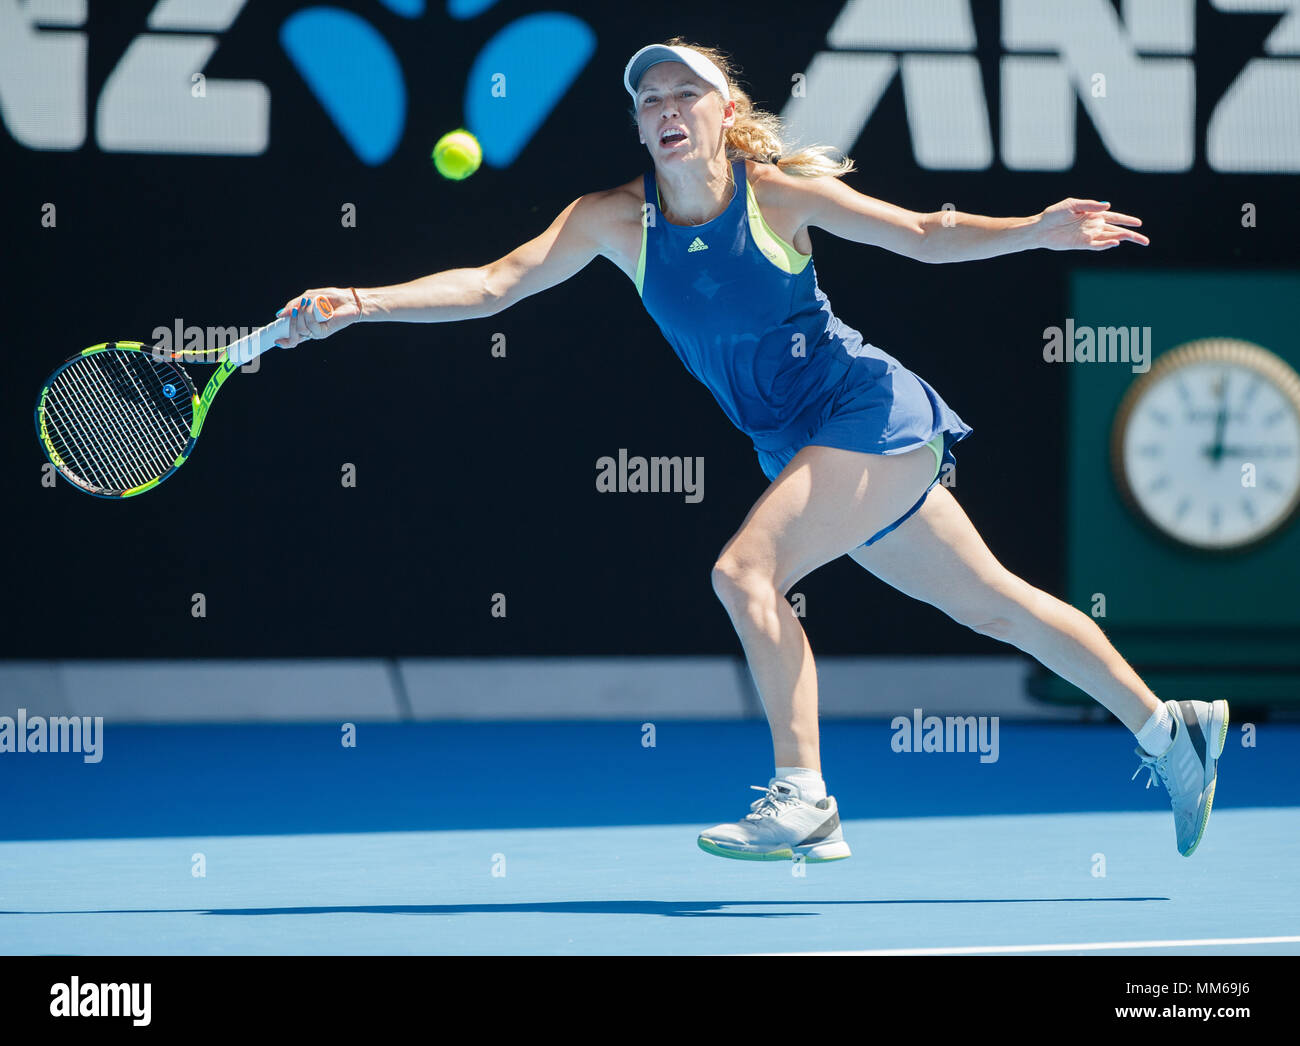 Danish tennis player Caroline Wozniacki playing forehand shot in Australian  Open 2018 Tennis Tournament, Melbourne Park, Melbourne, Victoria, Australi  Stock Photo - Alamy